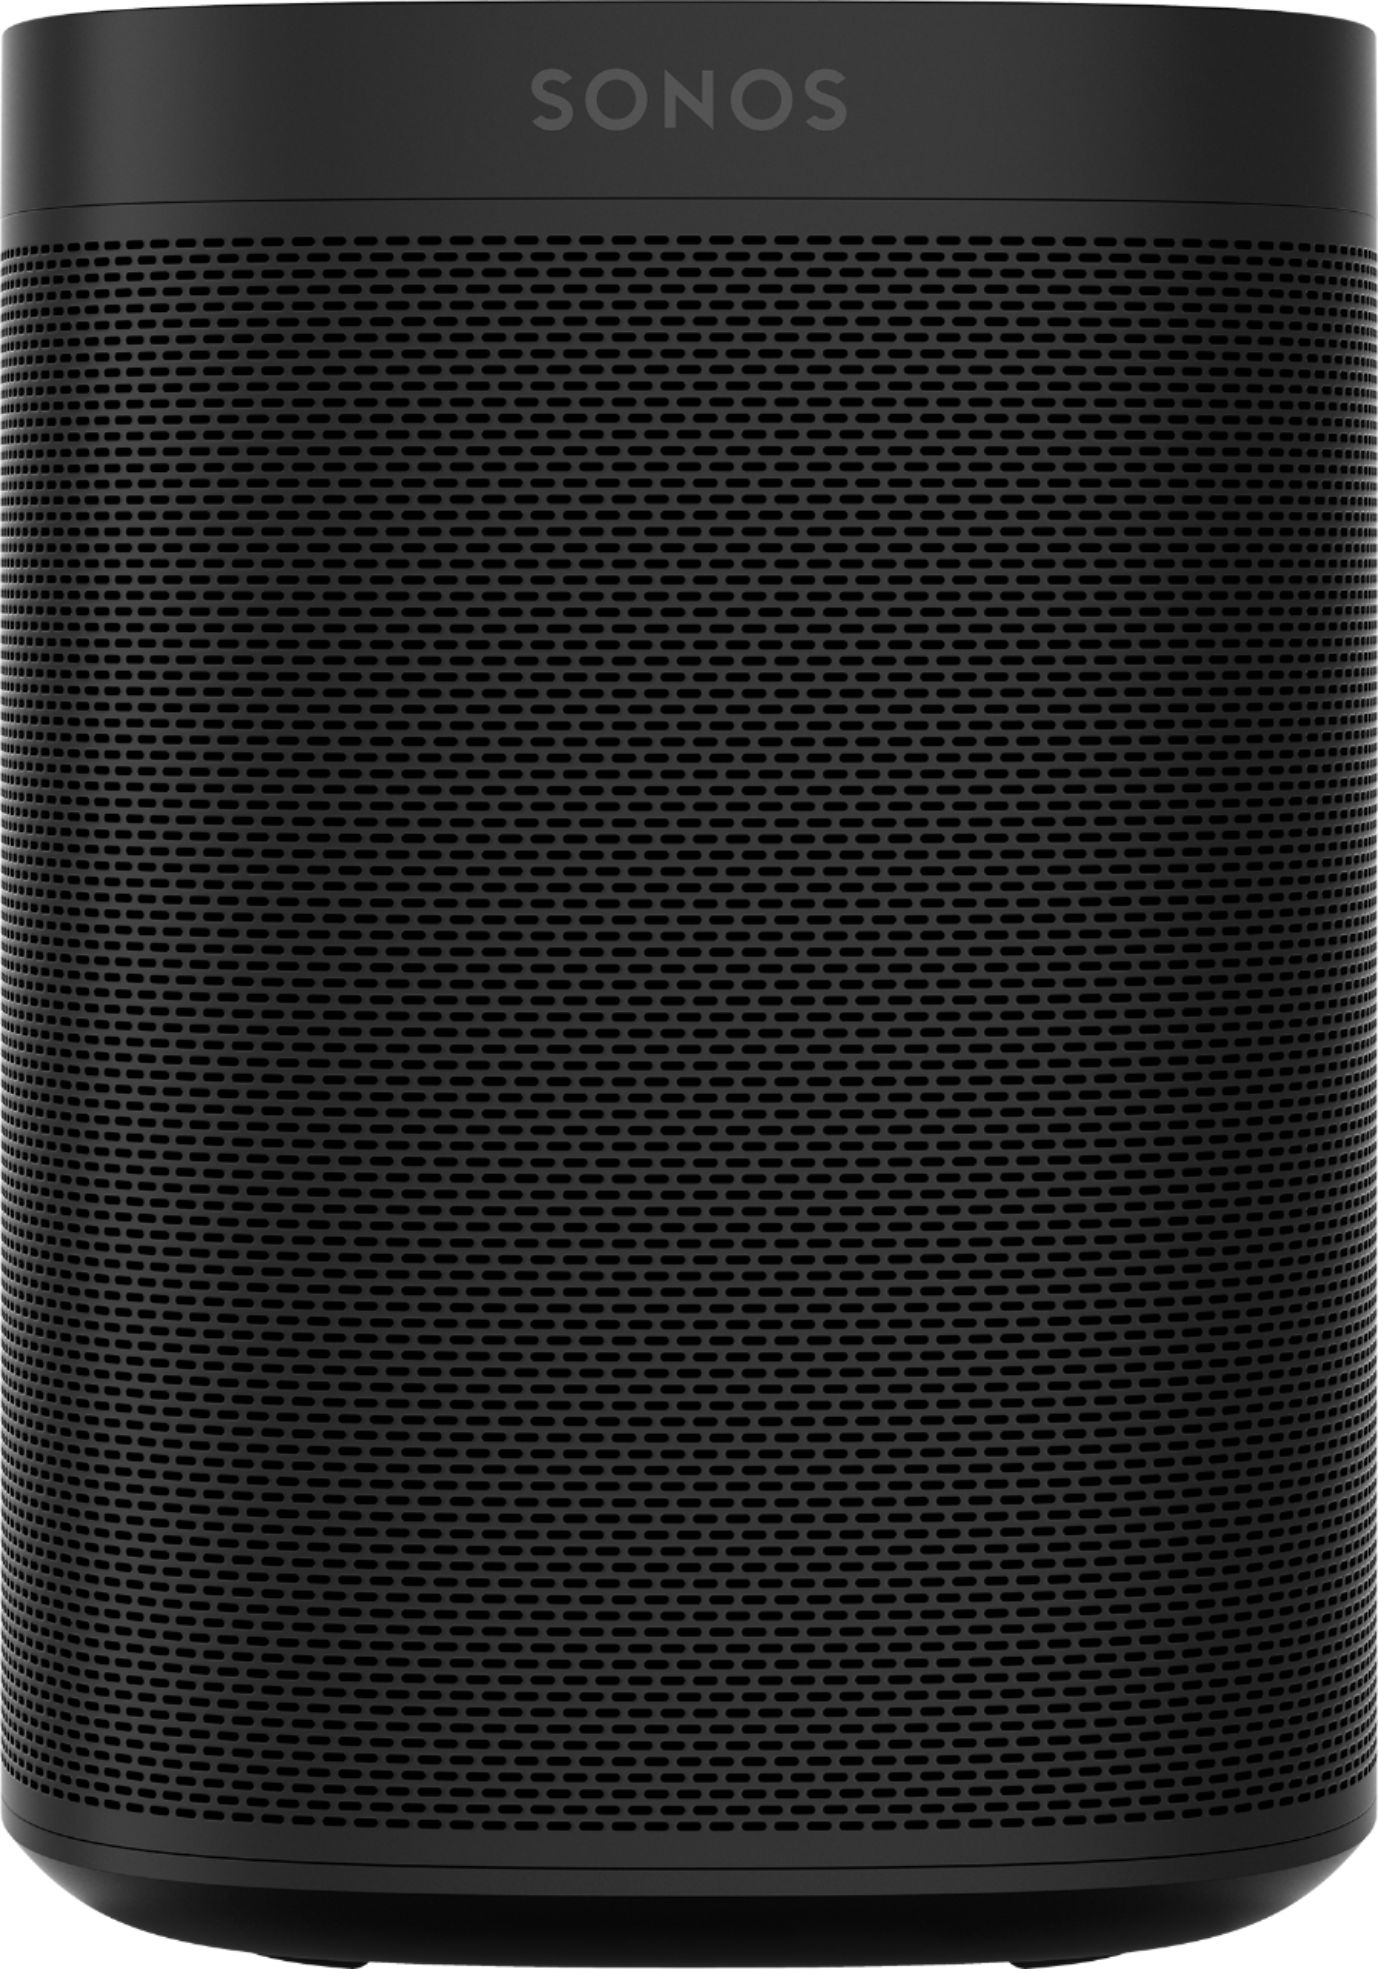 Sonos One (Gen 2) Smart Speaker with Voice Control built-in Black 